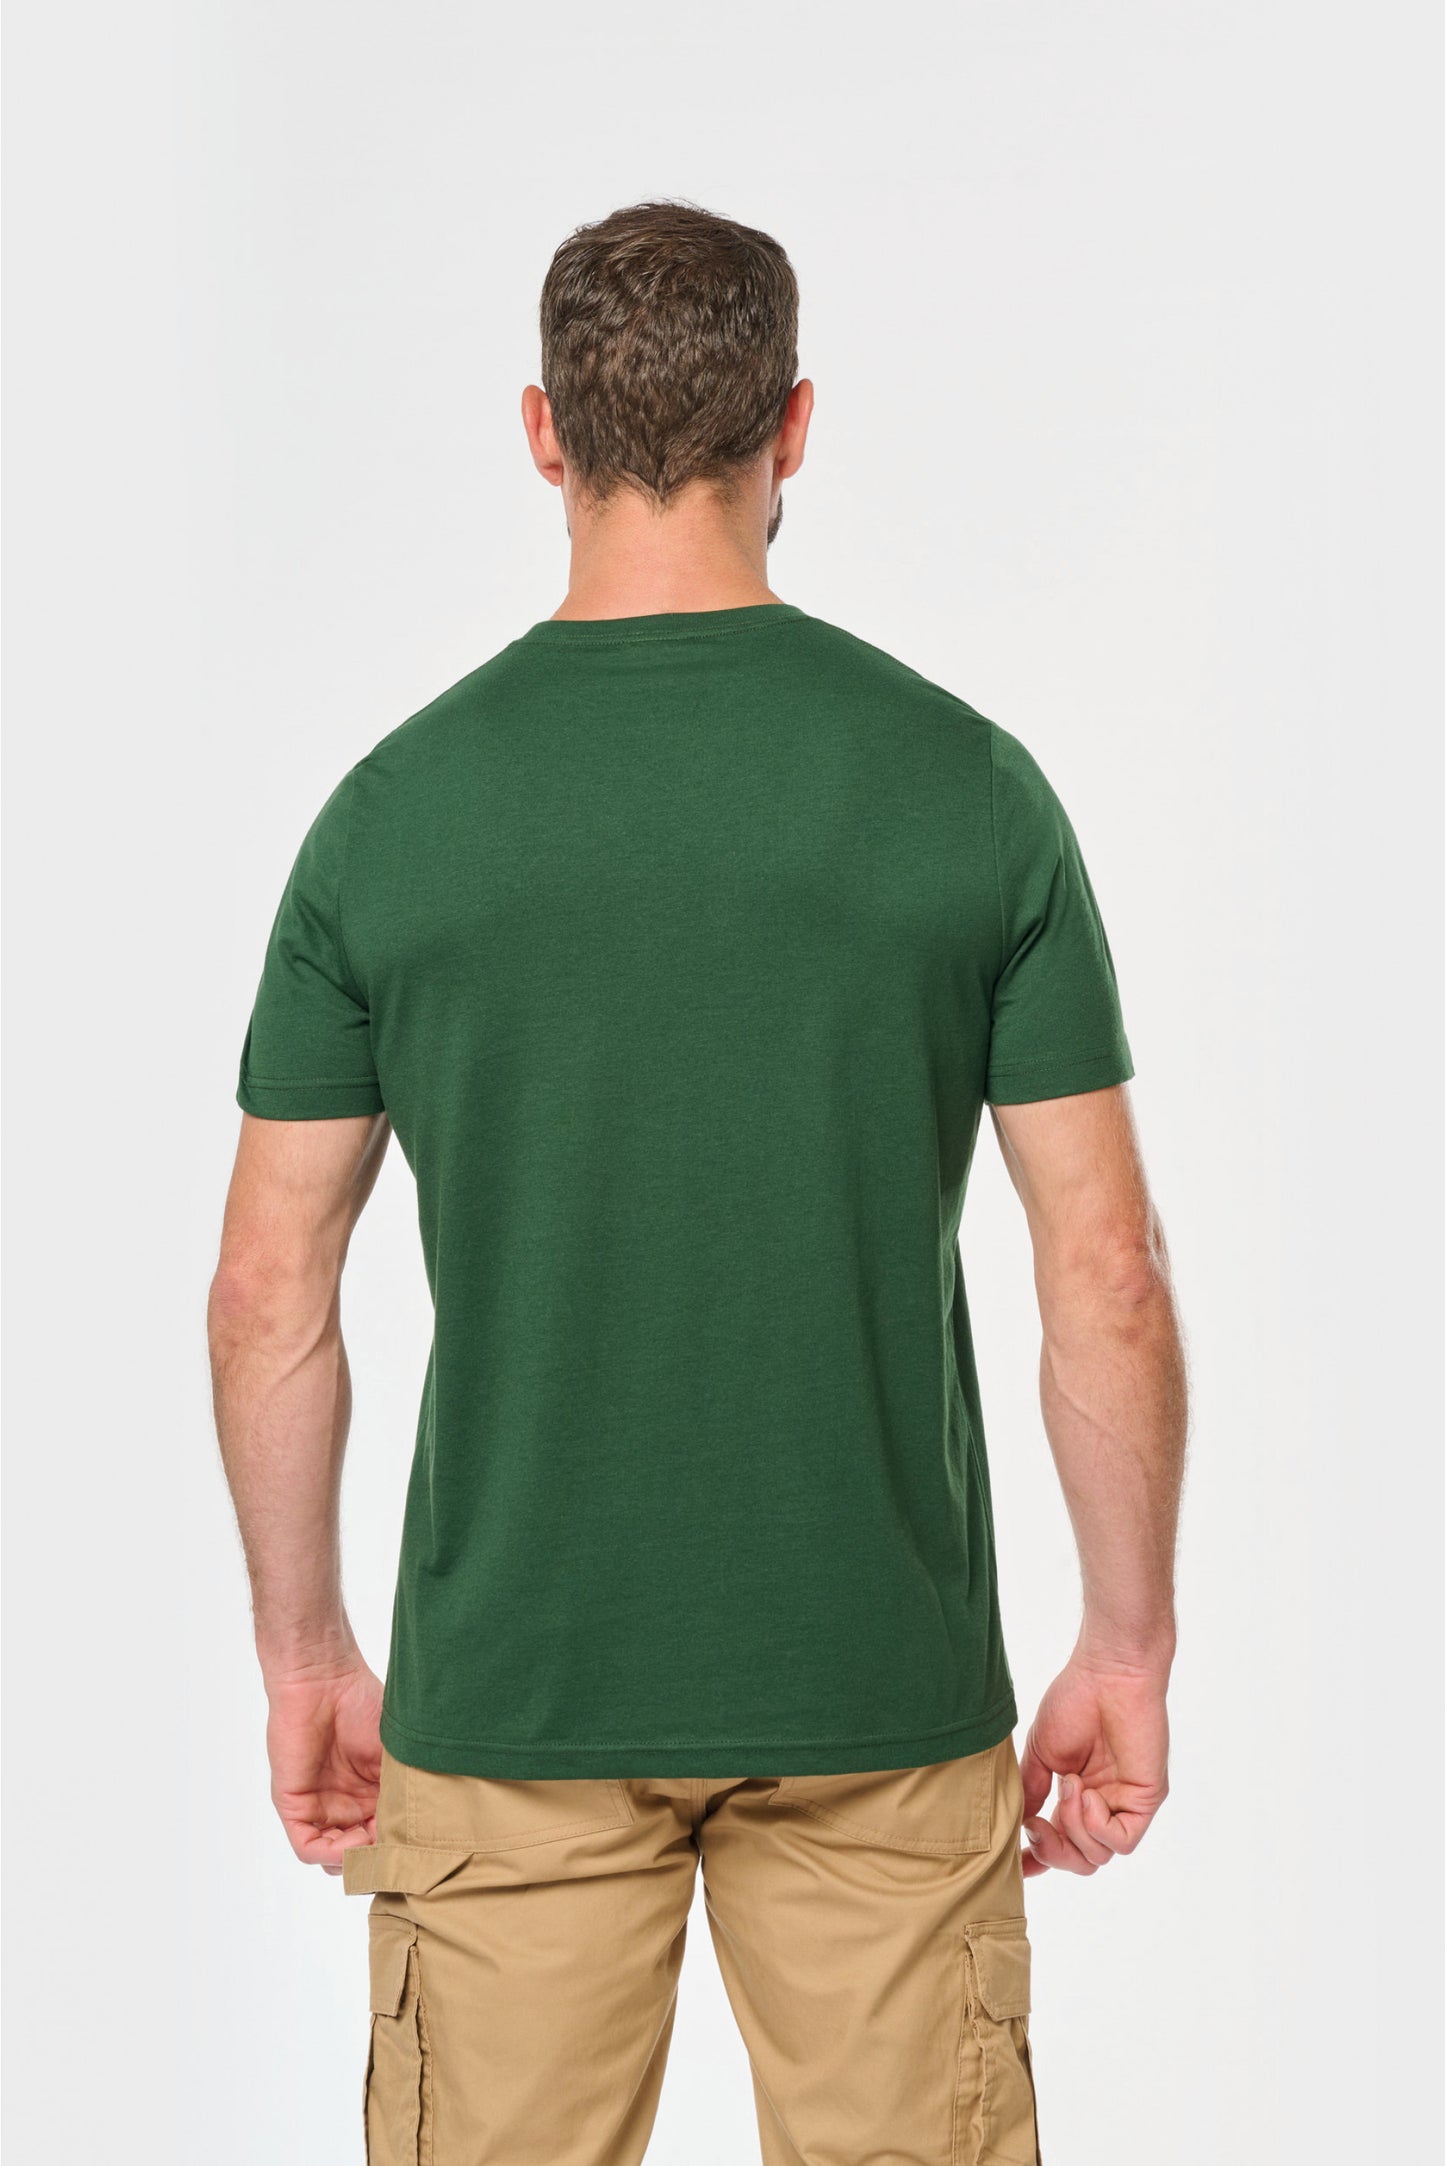 WK302 - T-shirt workwear col rond écoresponsable homme